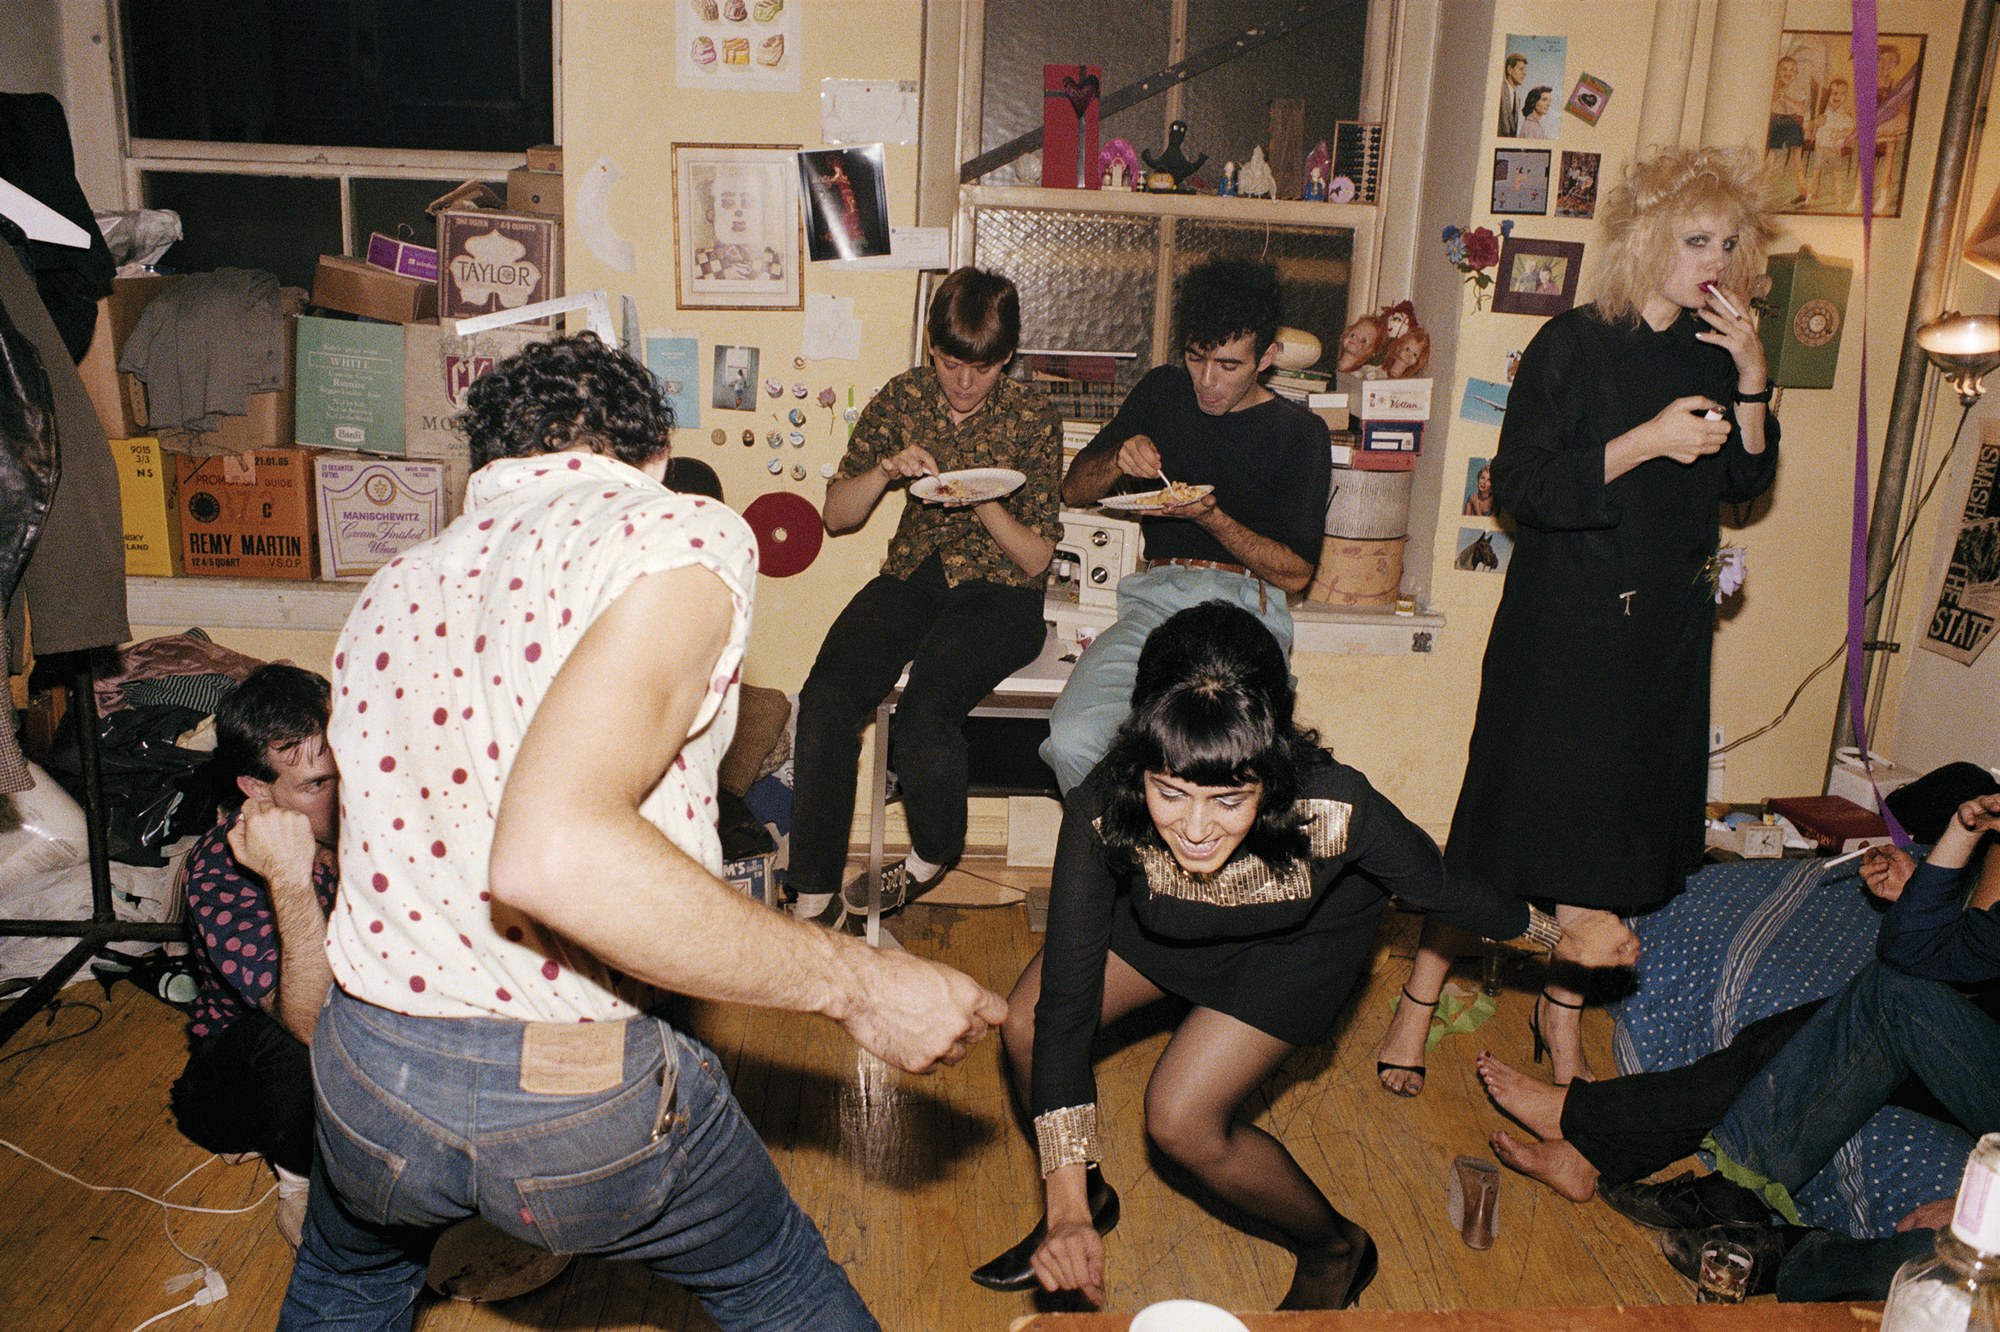 Twisting at my birthday party, New York City (1980) / Reprodução